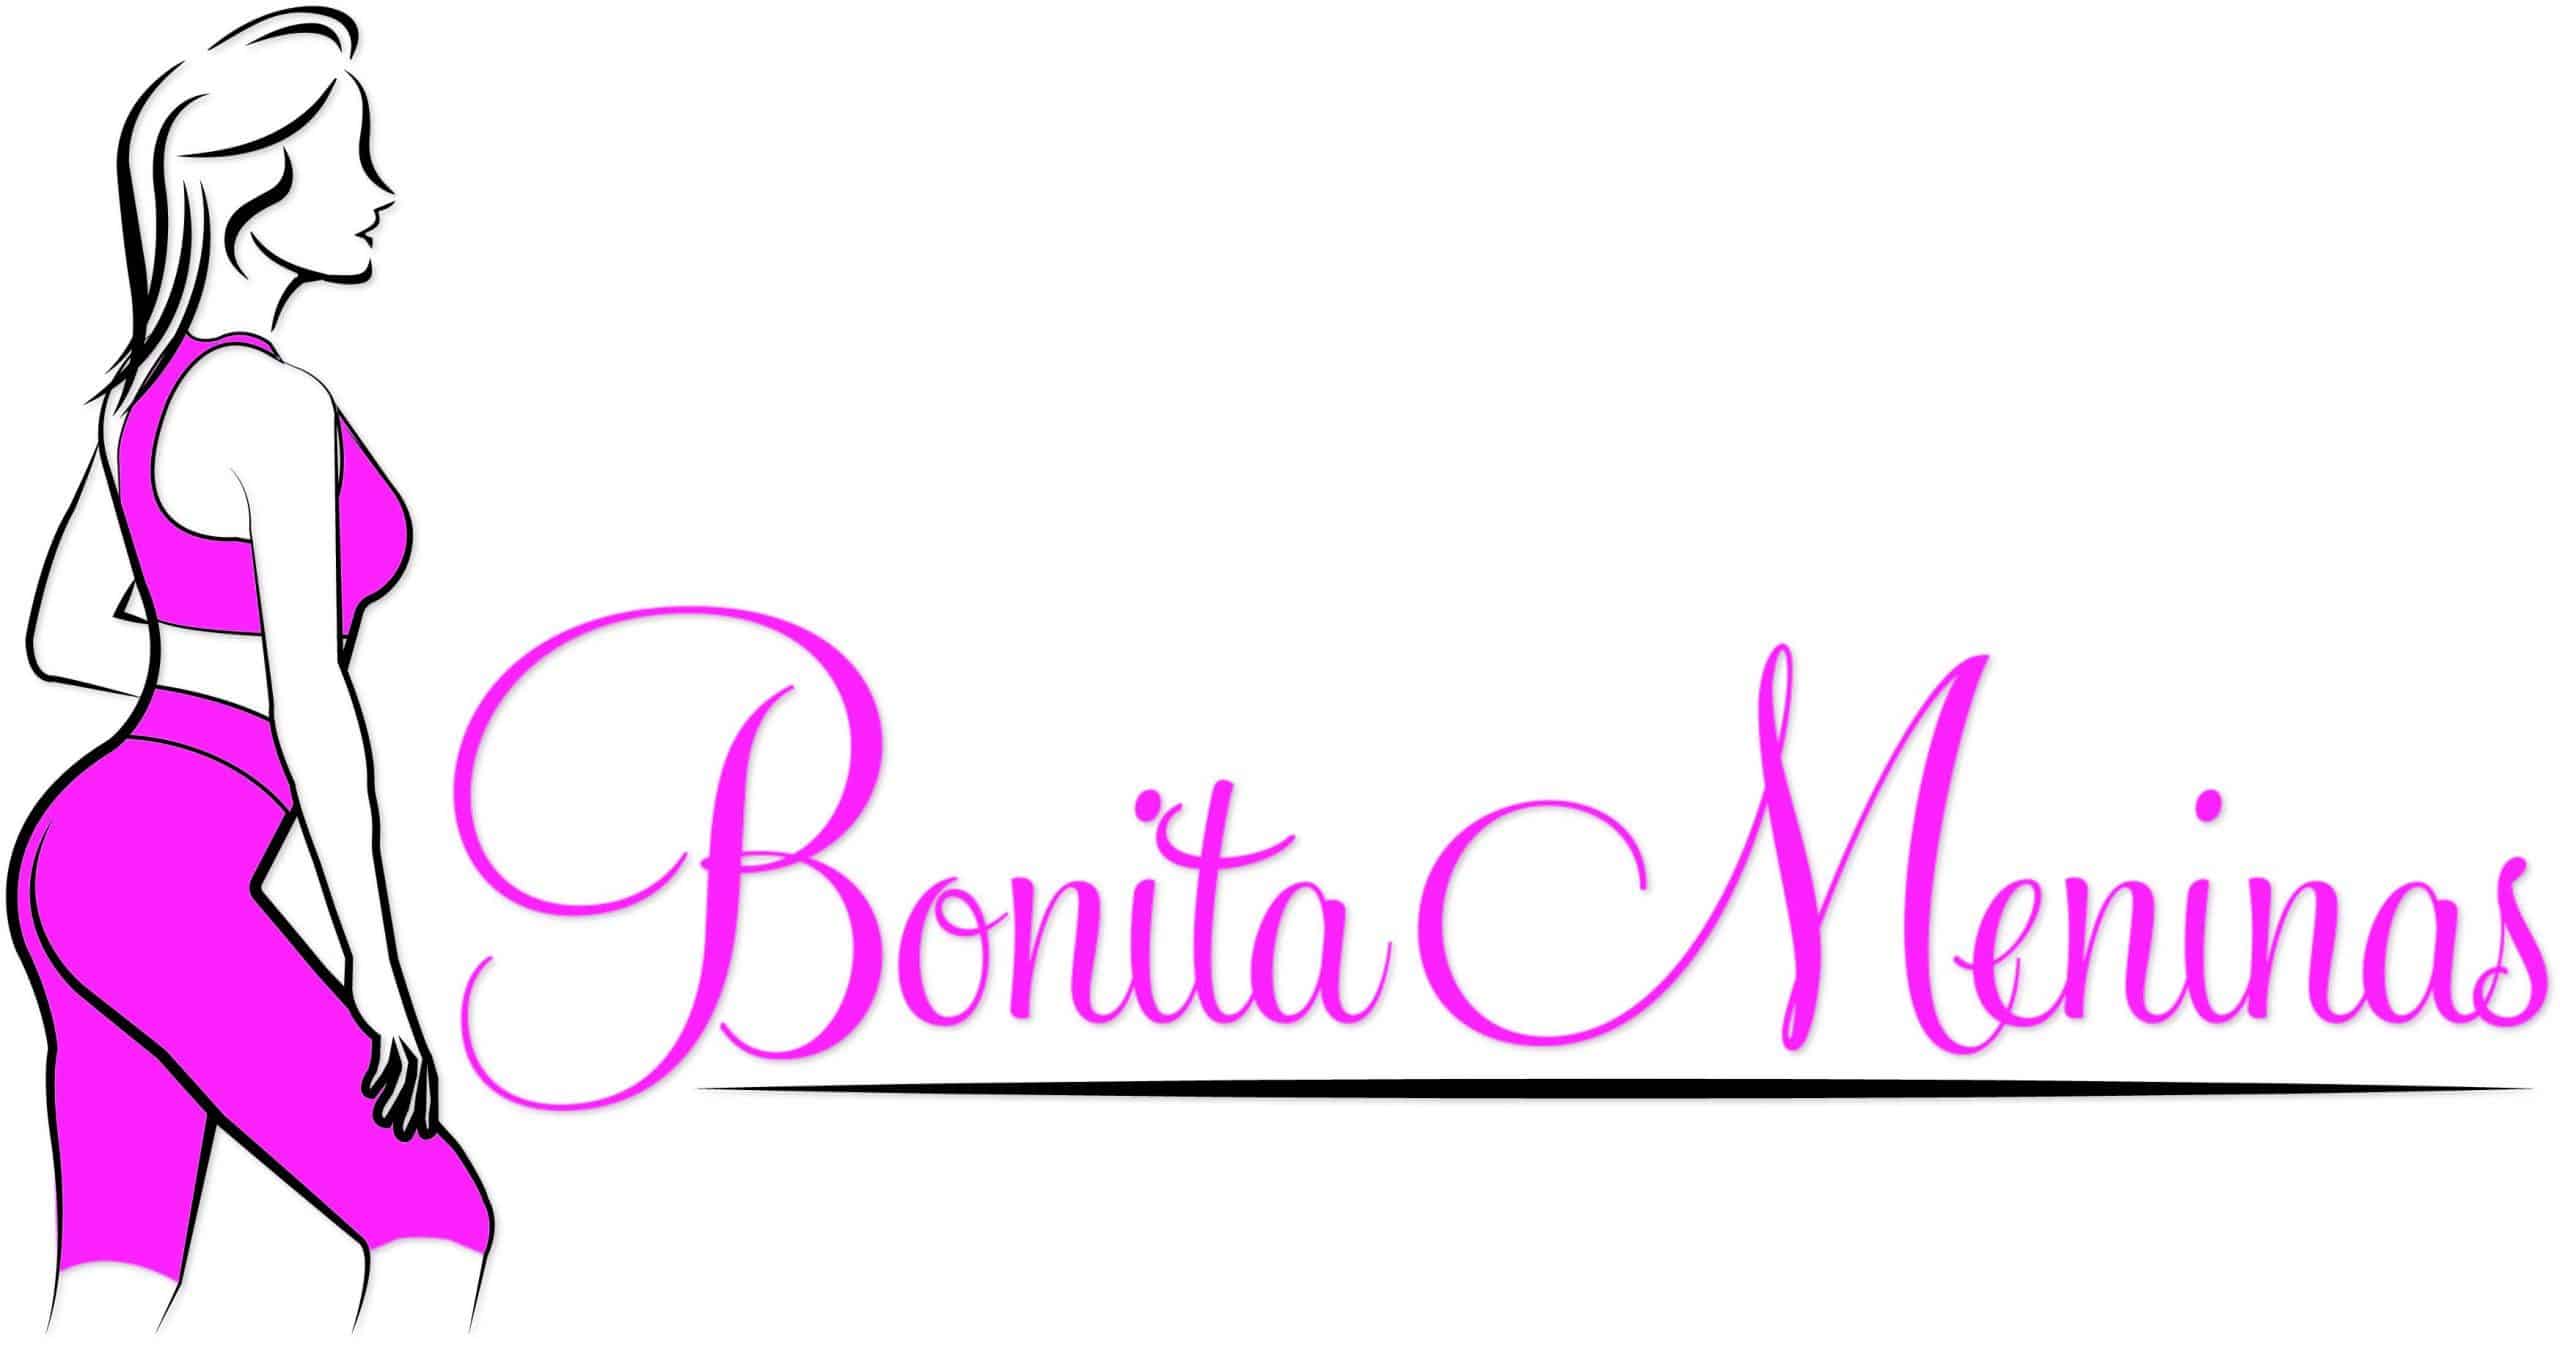 Bonita Meninas logo